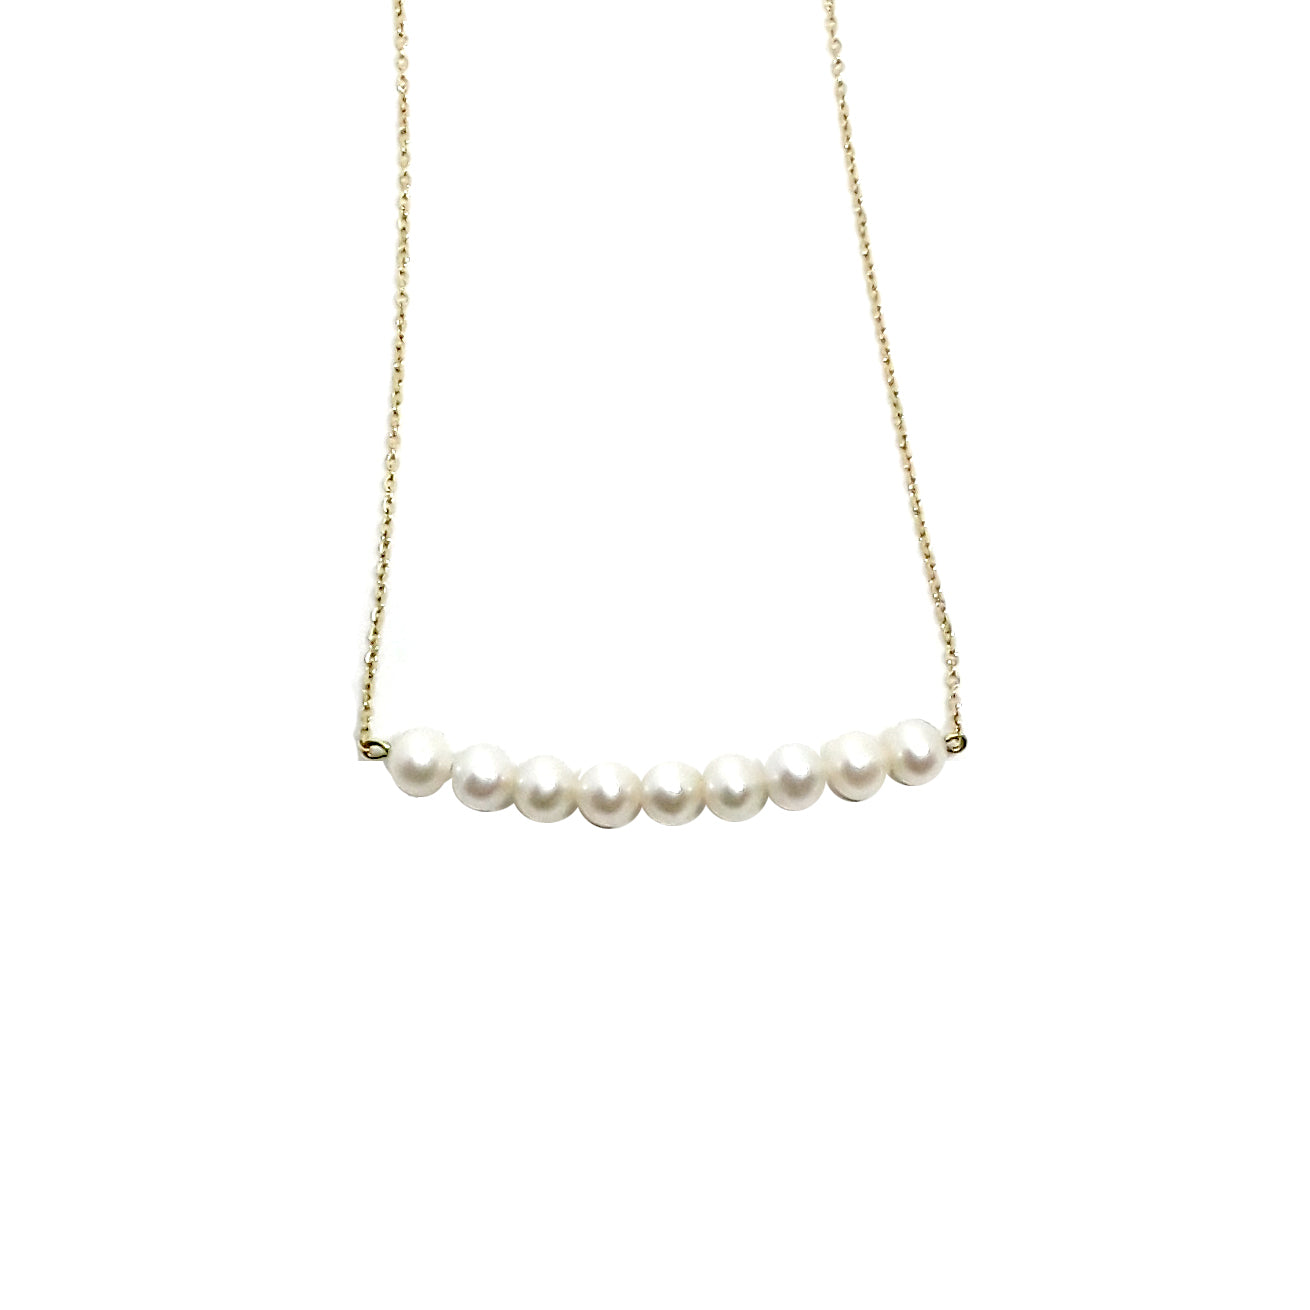 pearla necklace